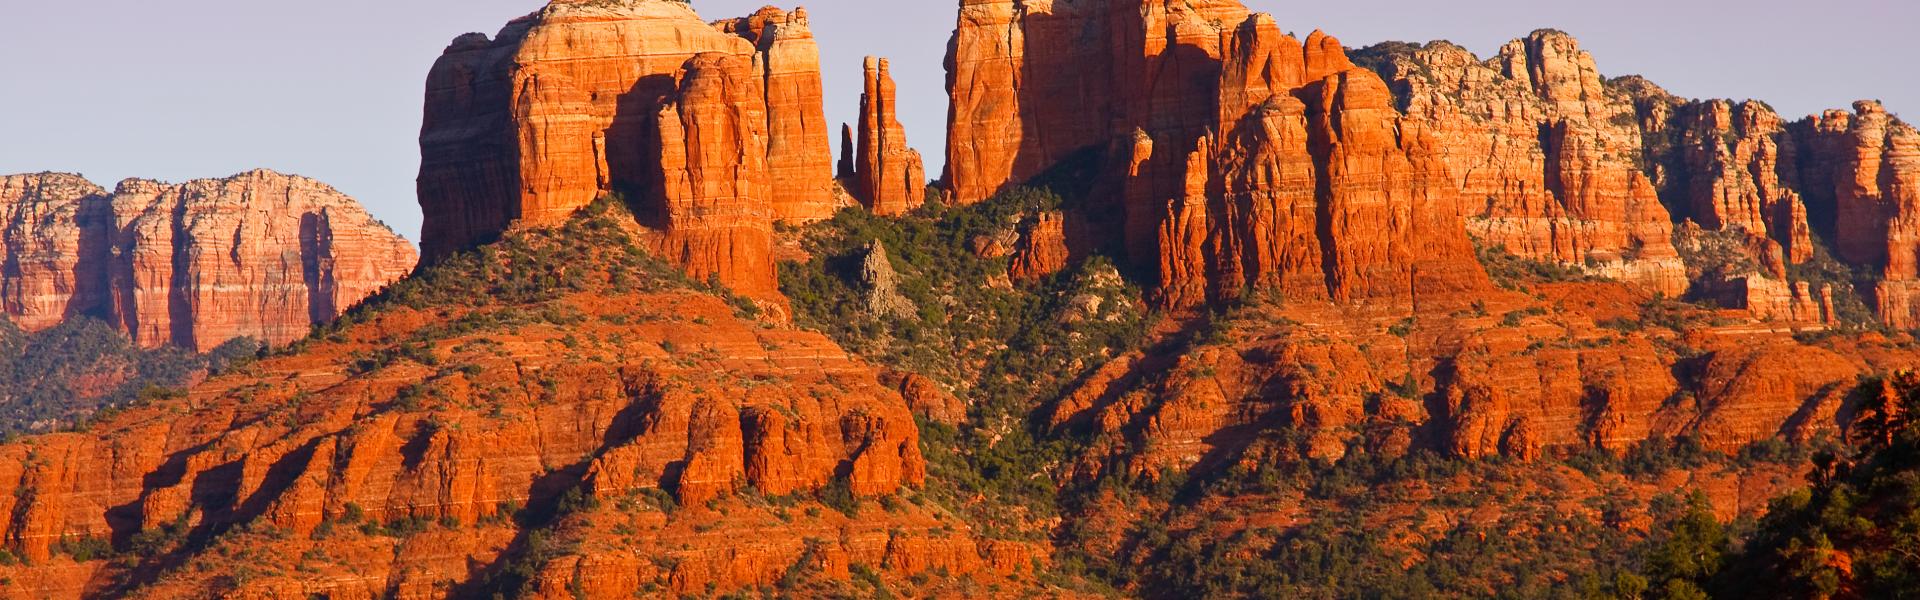 Red Rock Vacation Rentals & Homes - Arizona, United States